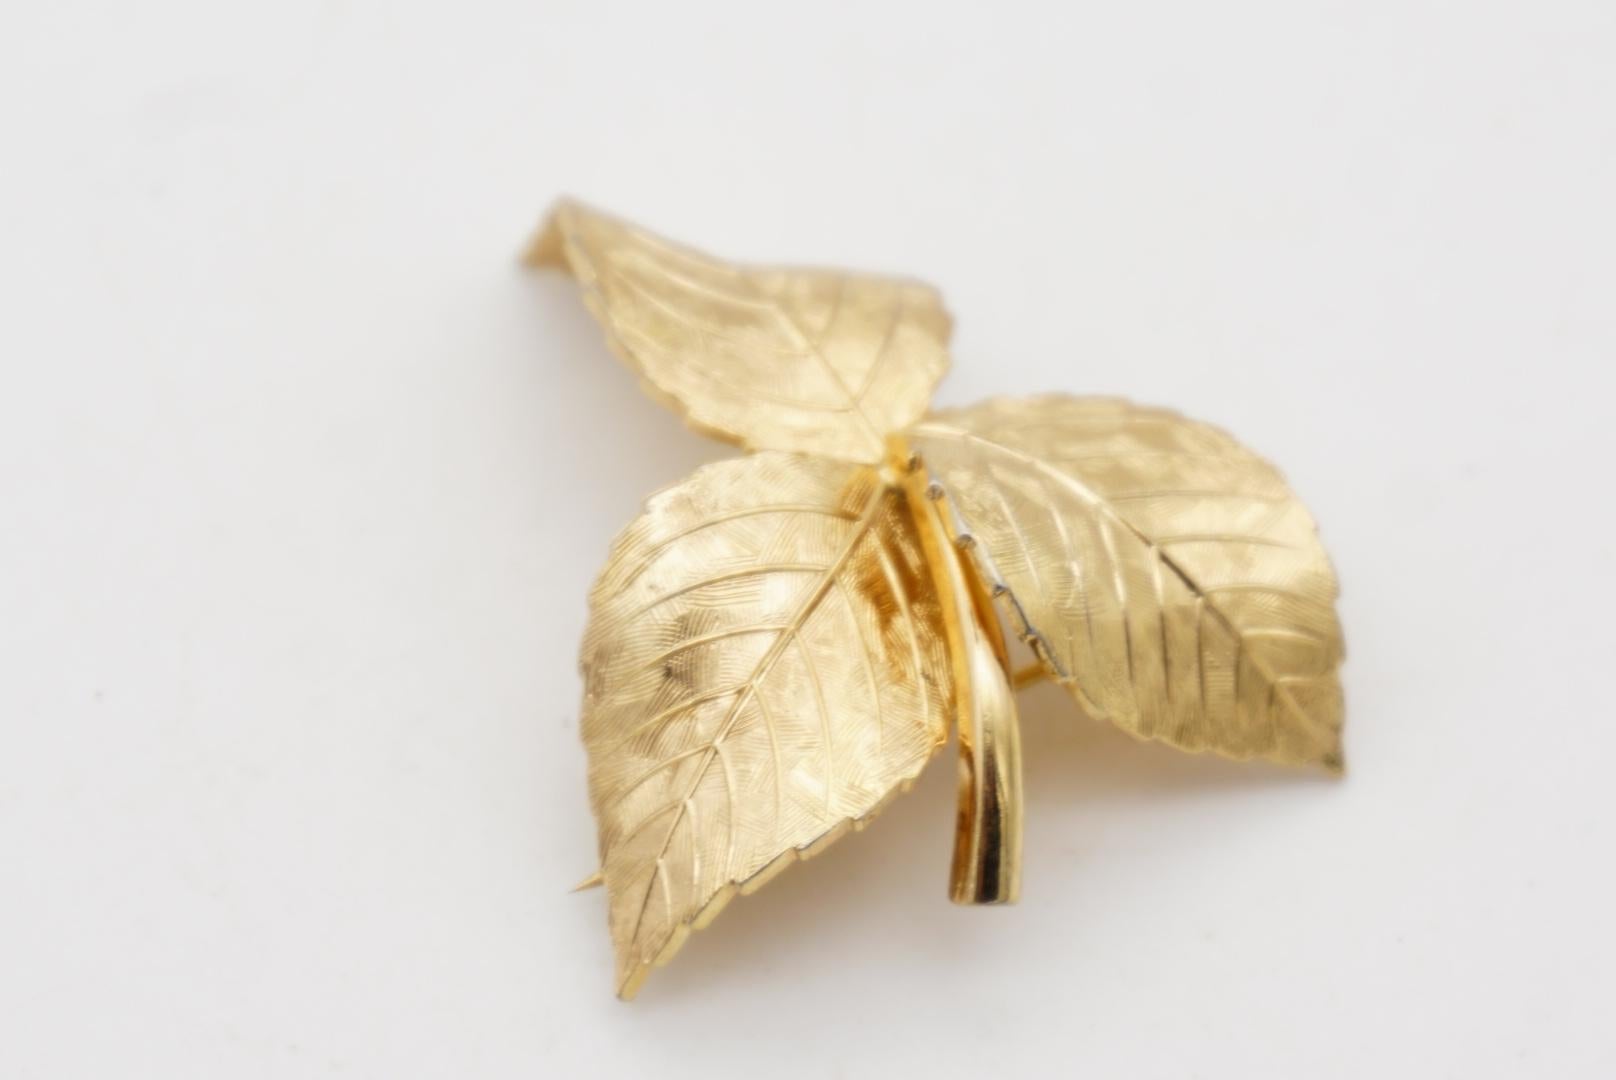 Christian Dior GROSSE 1959 Vivid Texture Trio Leaf Wavy Swirl Twist Gold Brooch For Sale 2